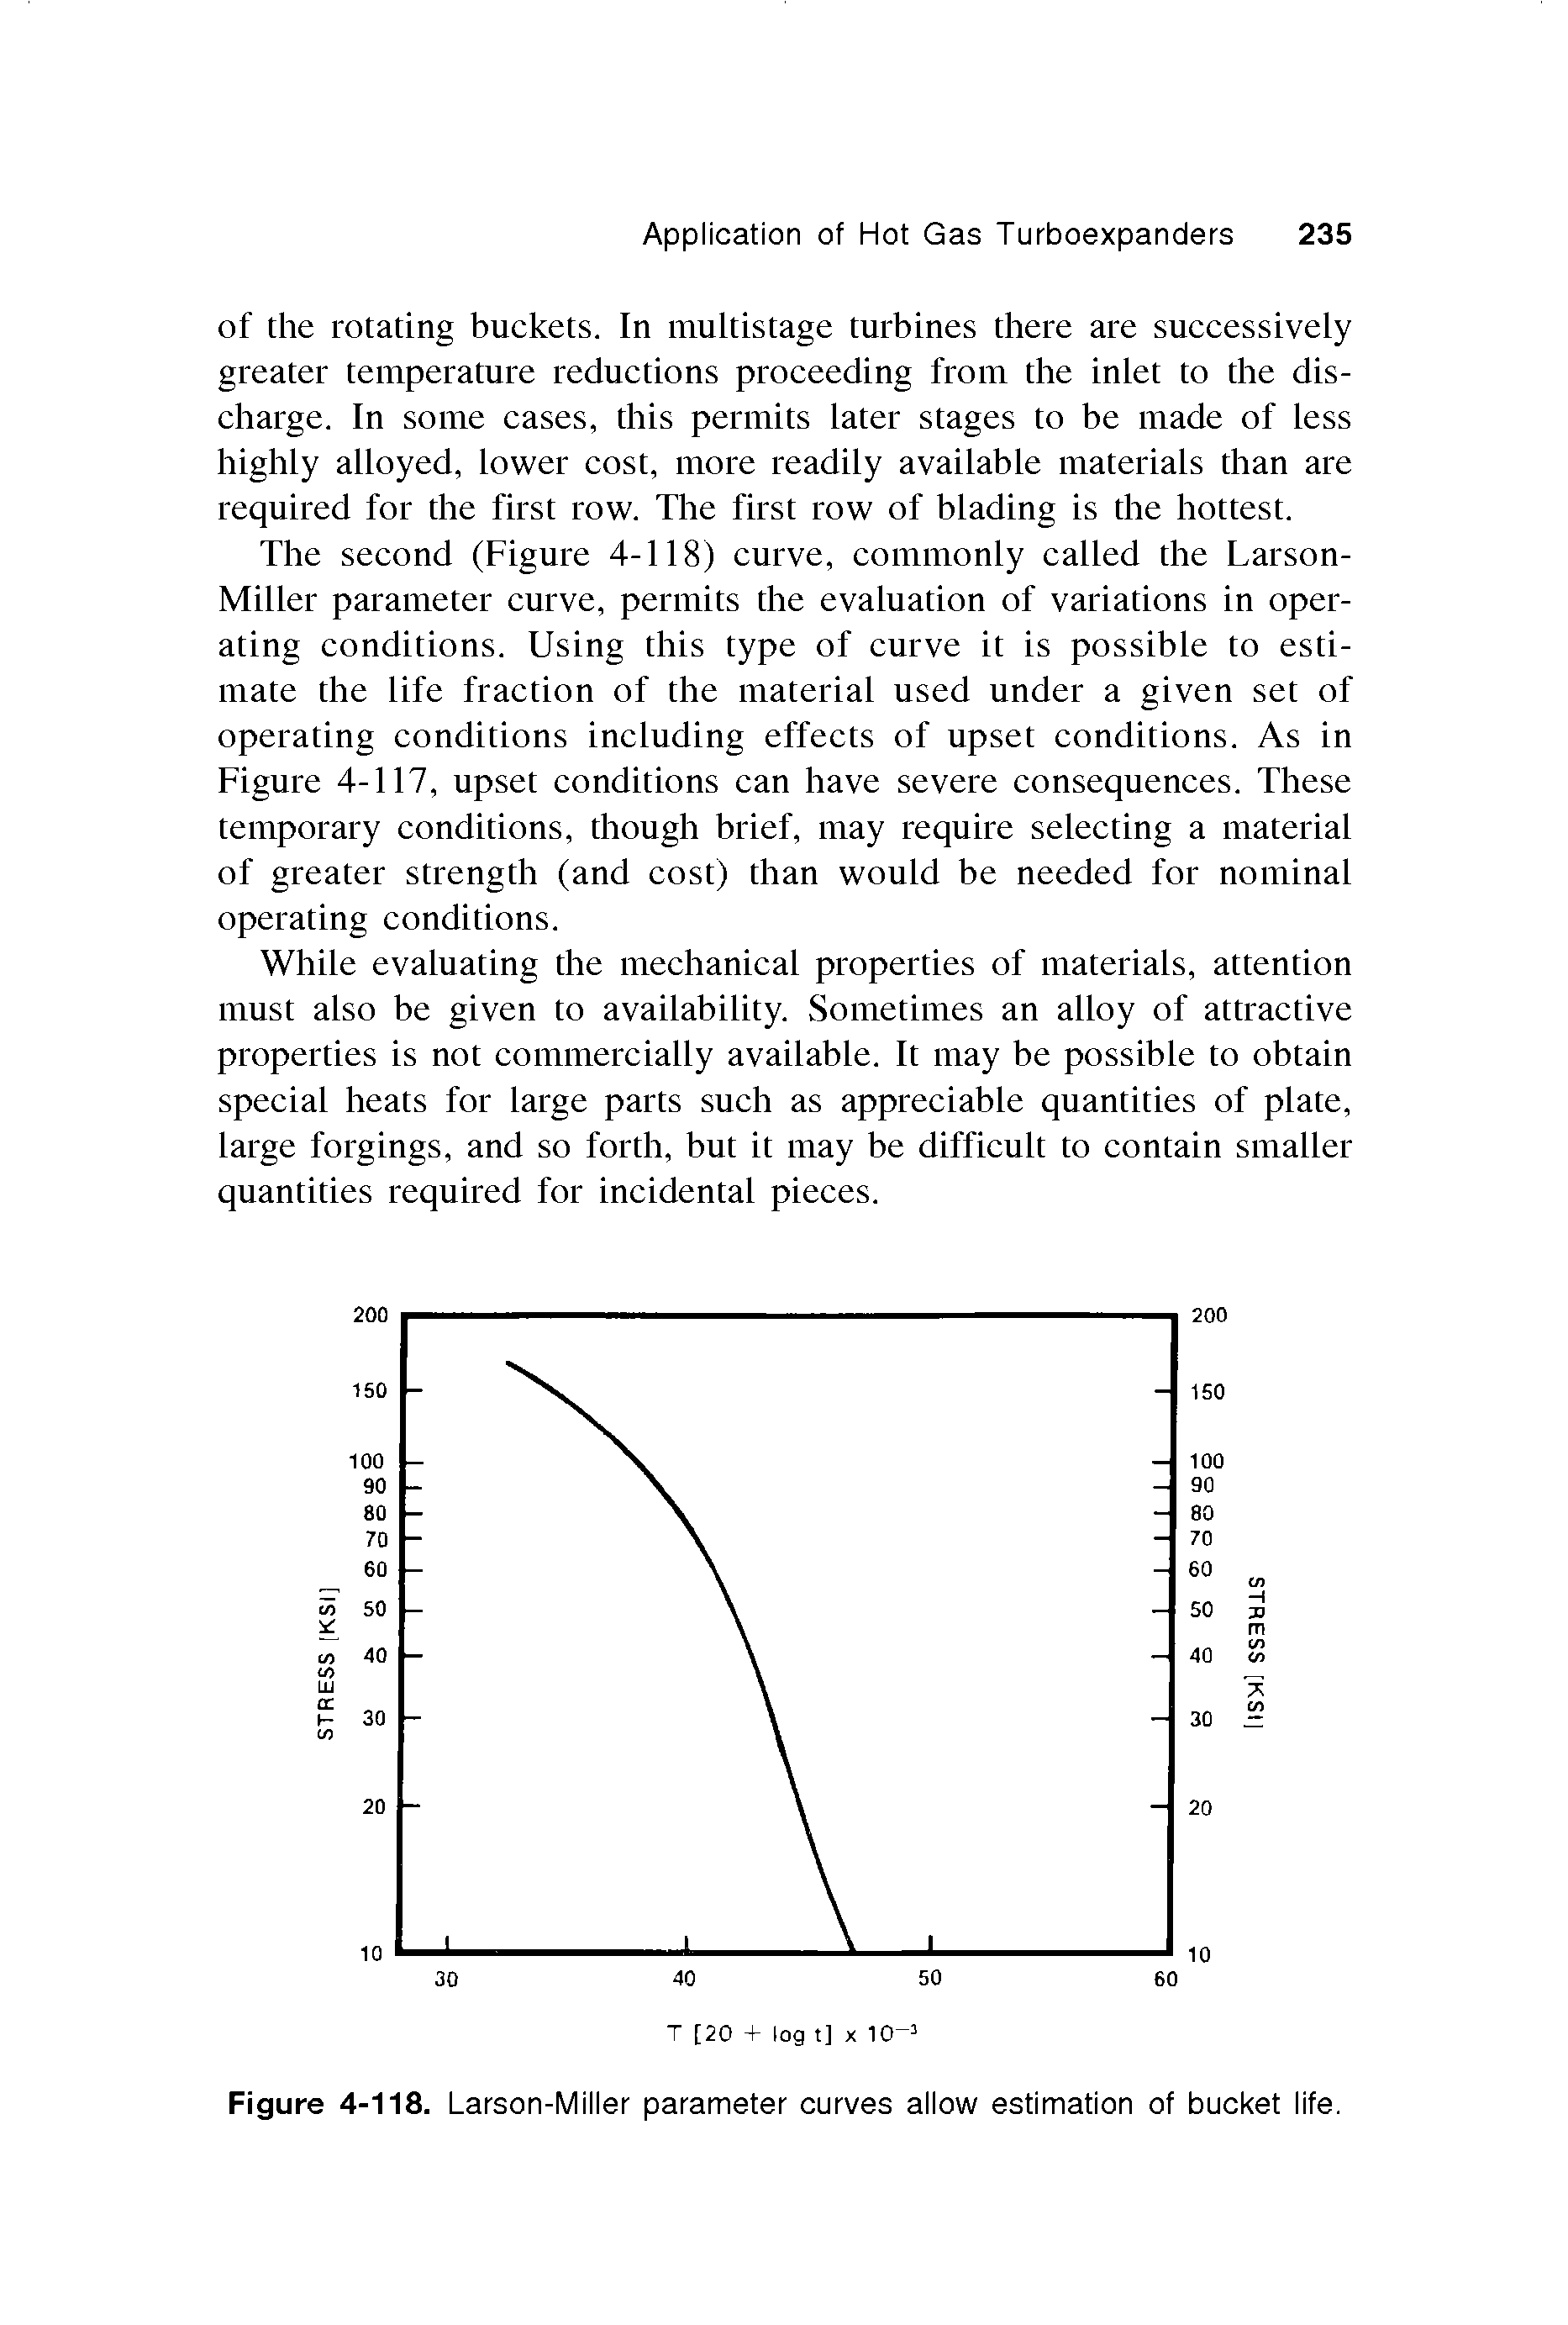 Figure 4-118. Larson-Miller parameter curves allow estimation of bucket life.